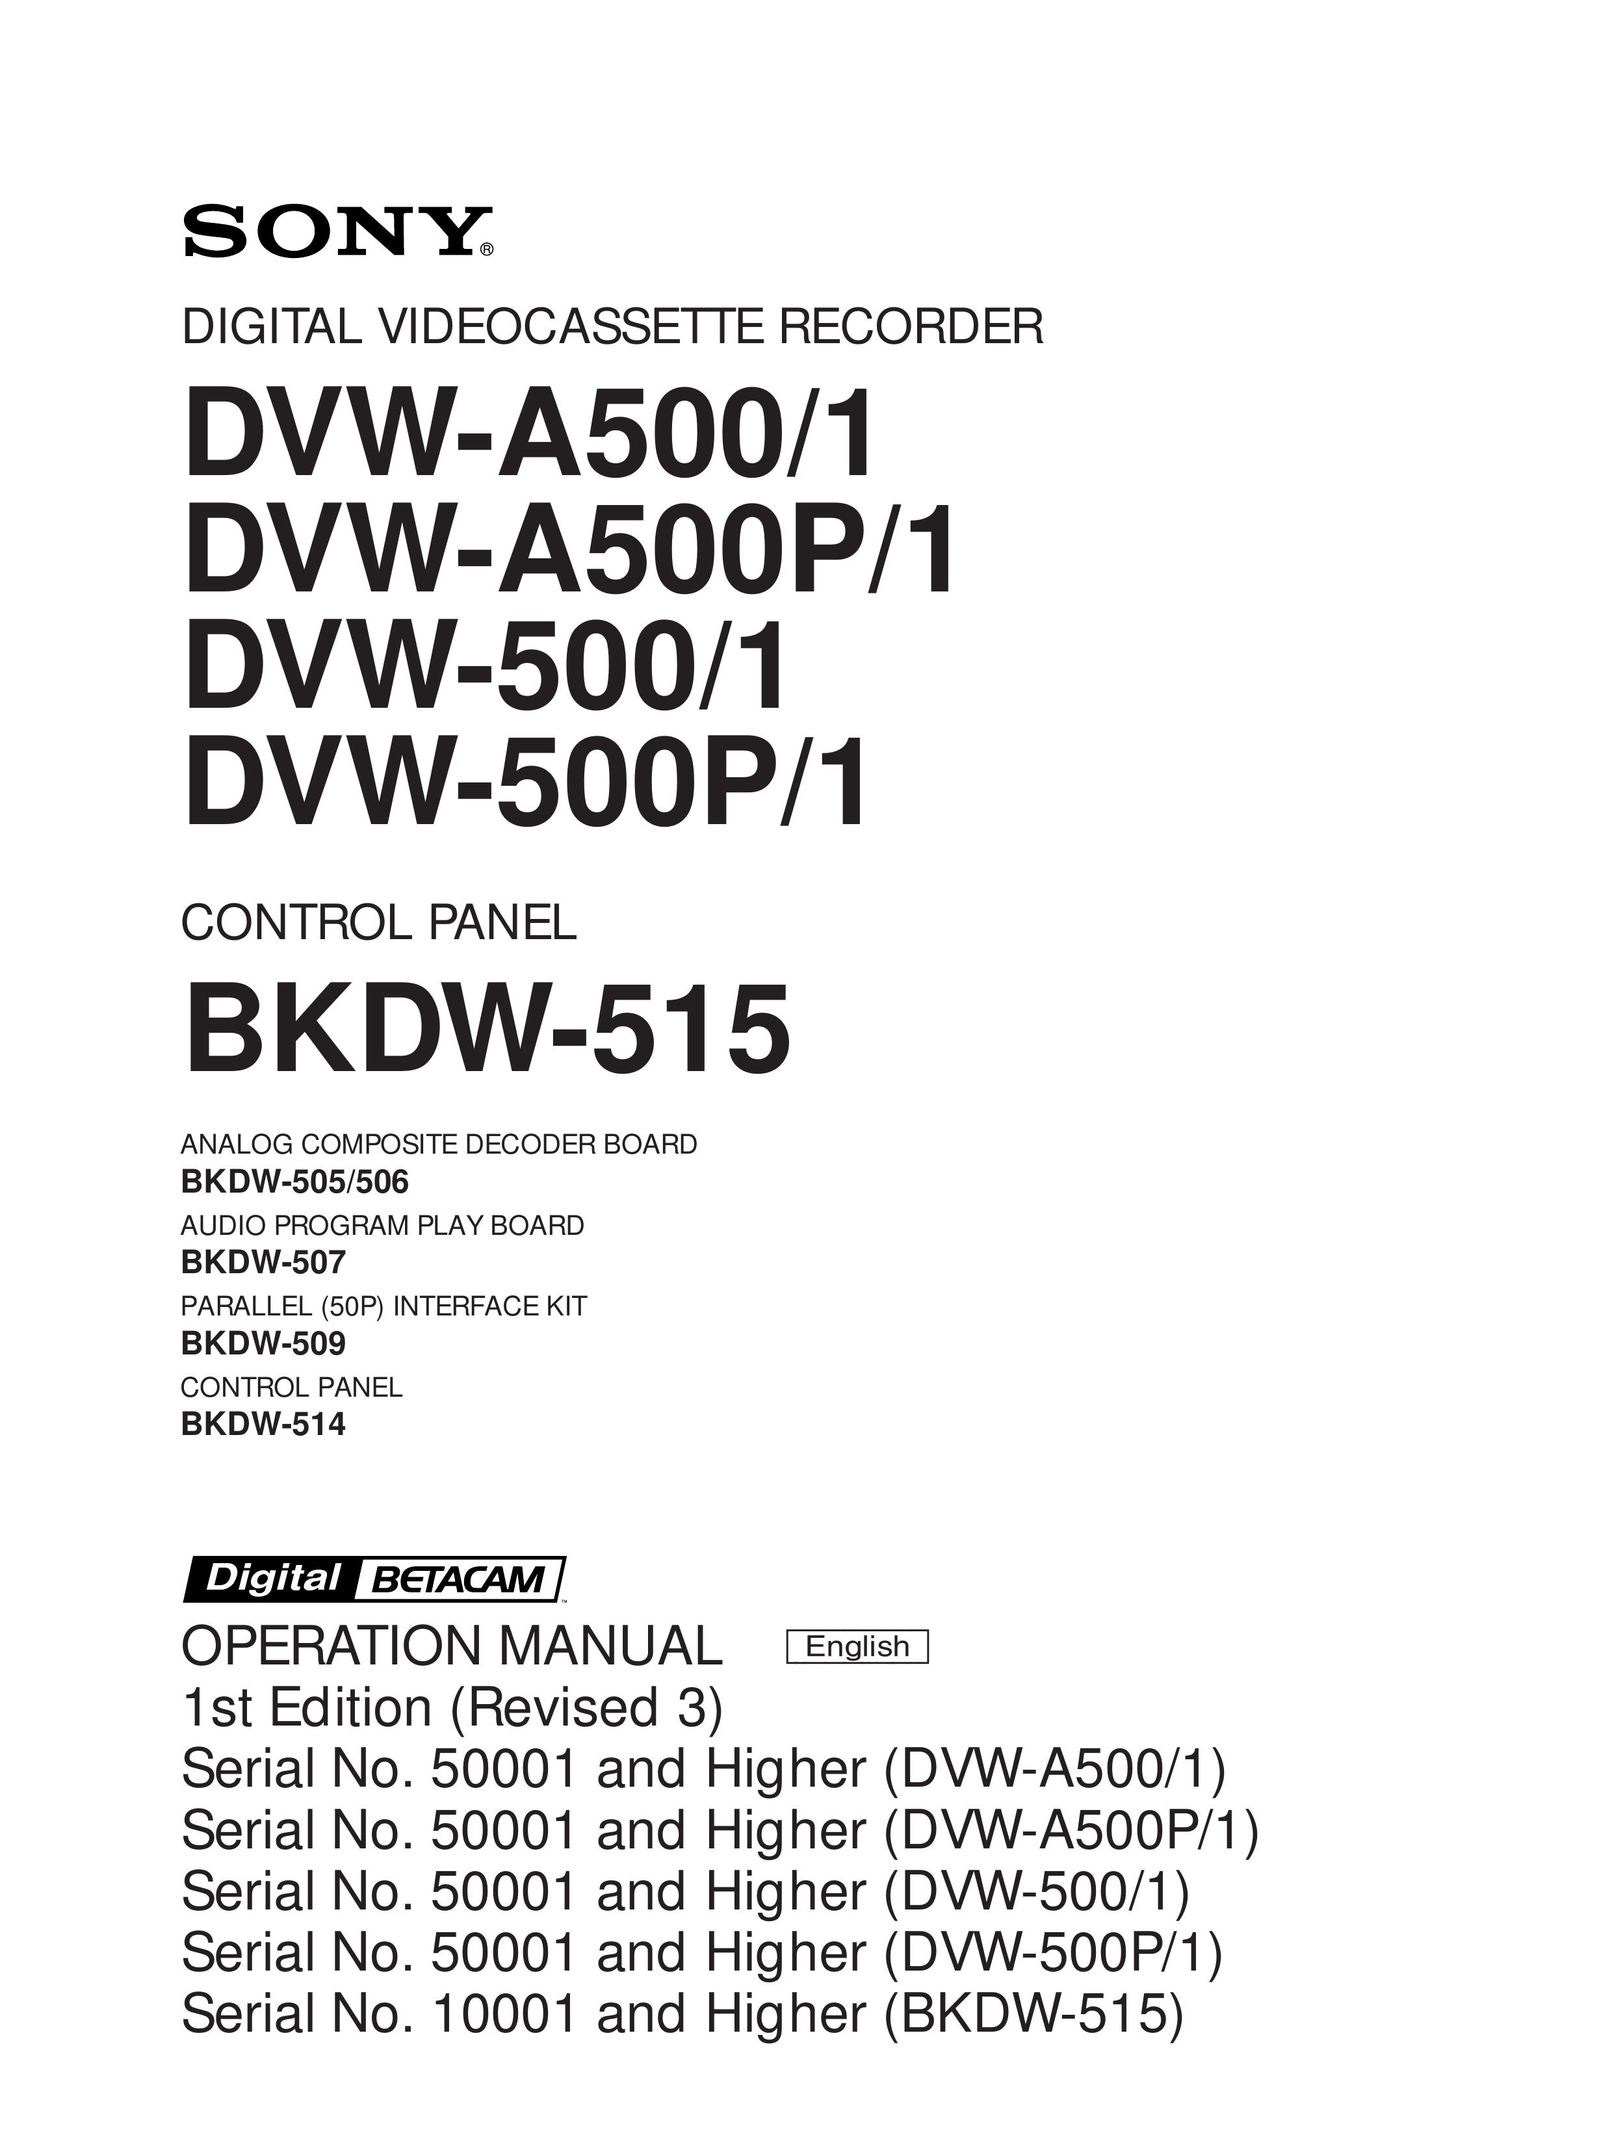 Sony BKDW-514 DVR User Manual